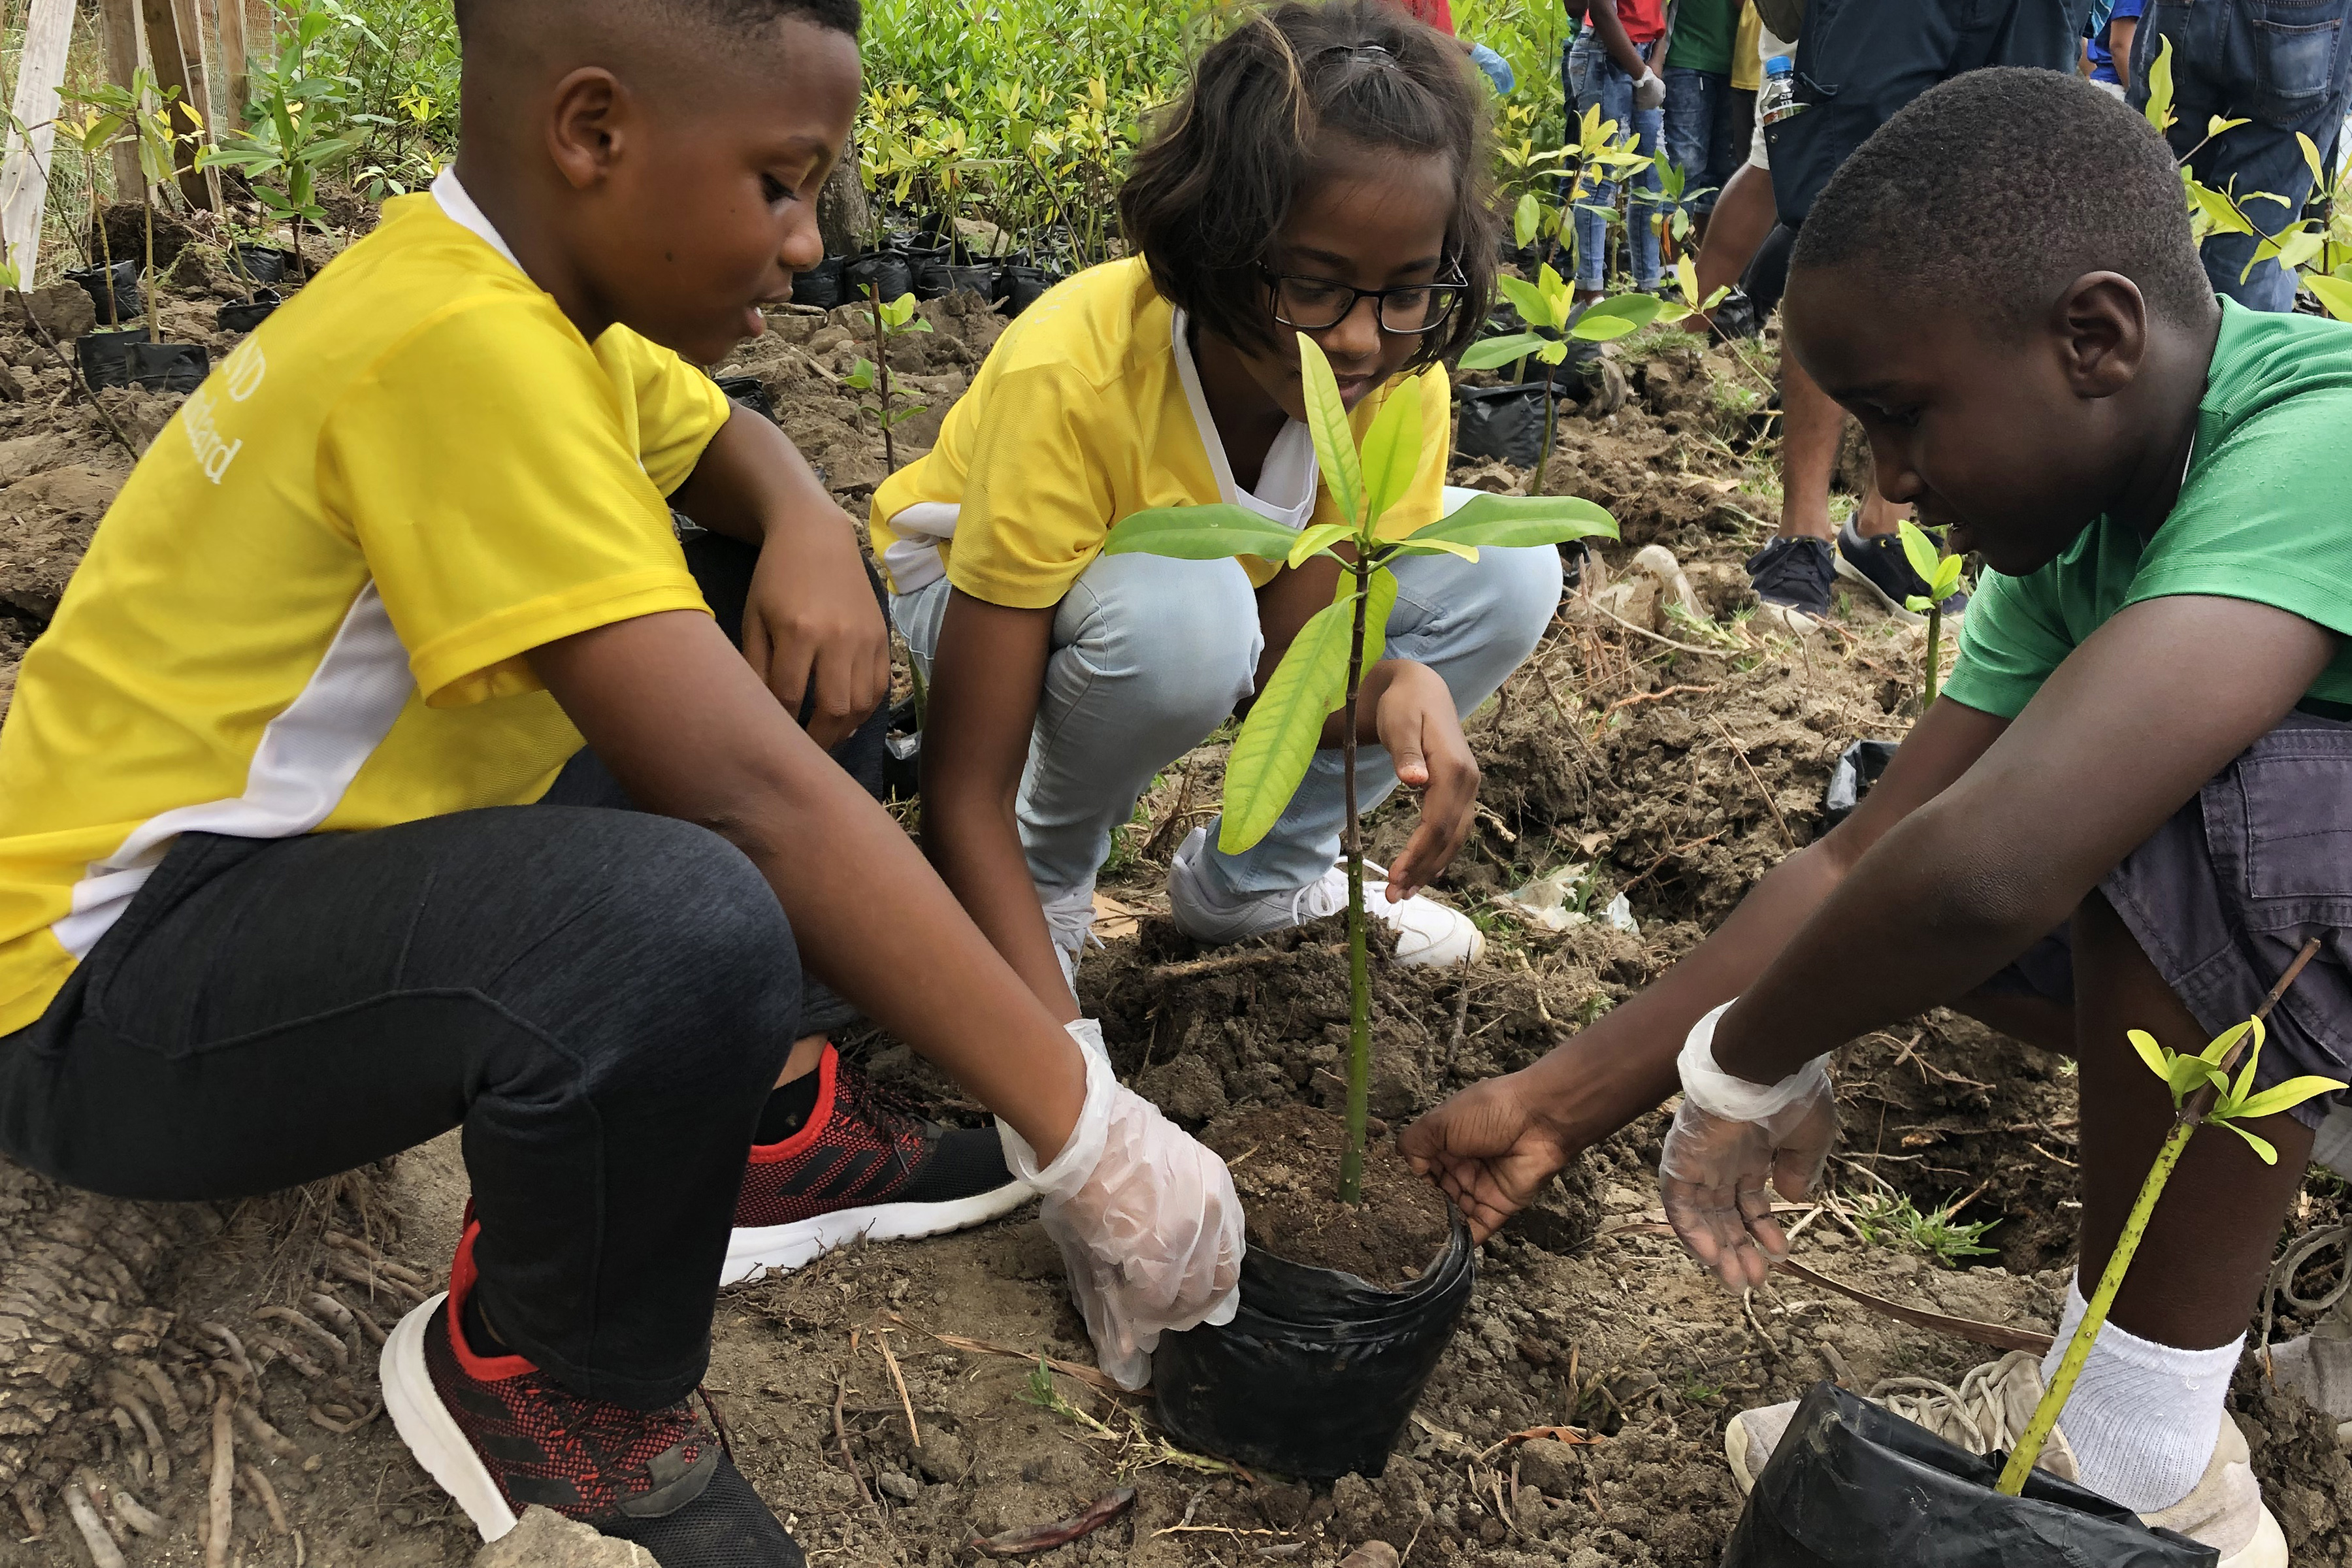 Young kids plant mangrove seedlings as part of a community habitat restoration effort.